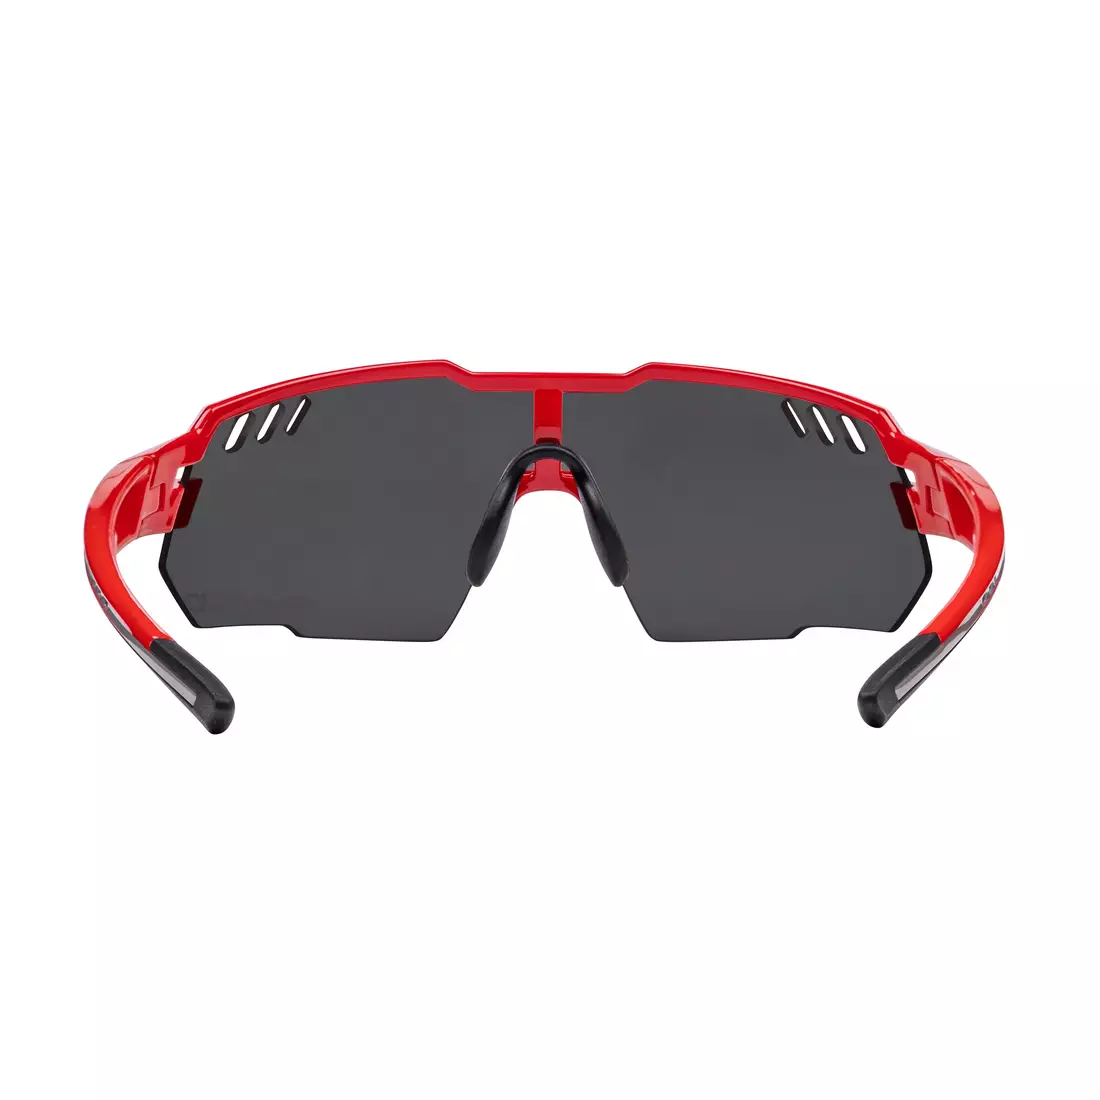 FORCE slnečné okuliare AMOLEDO, červenošedé, čierne sklá 910861